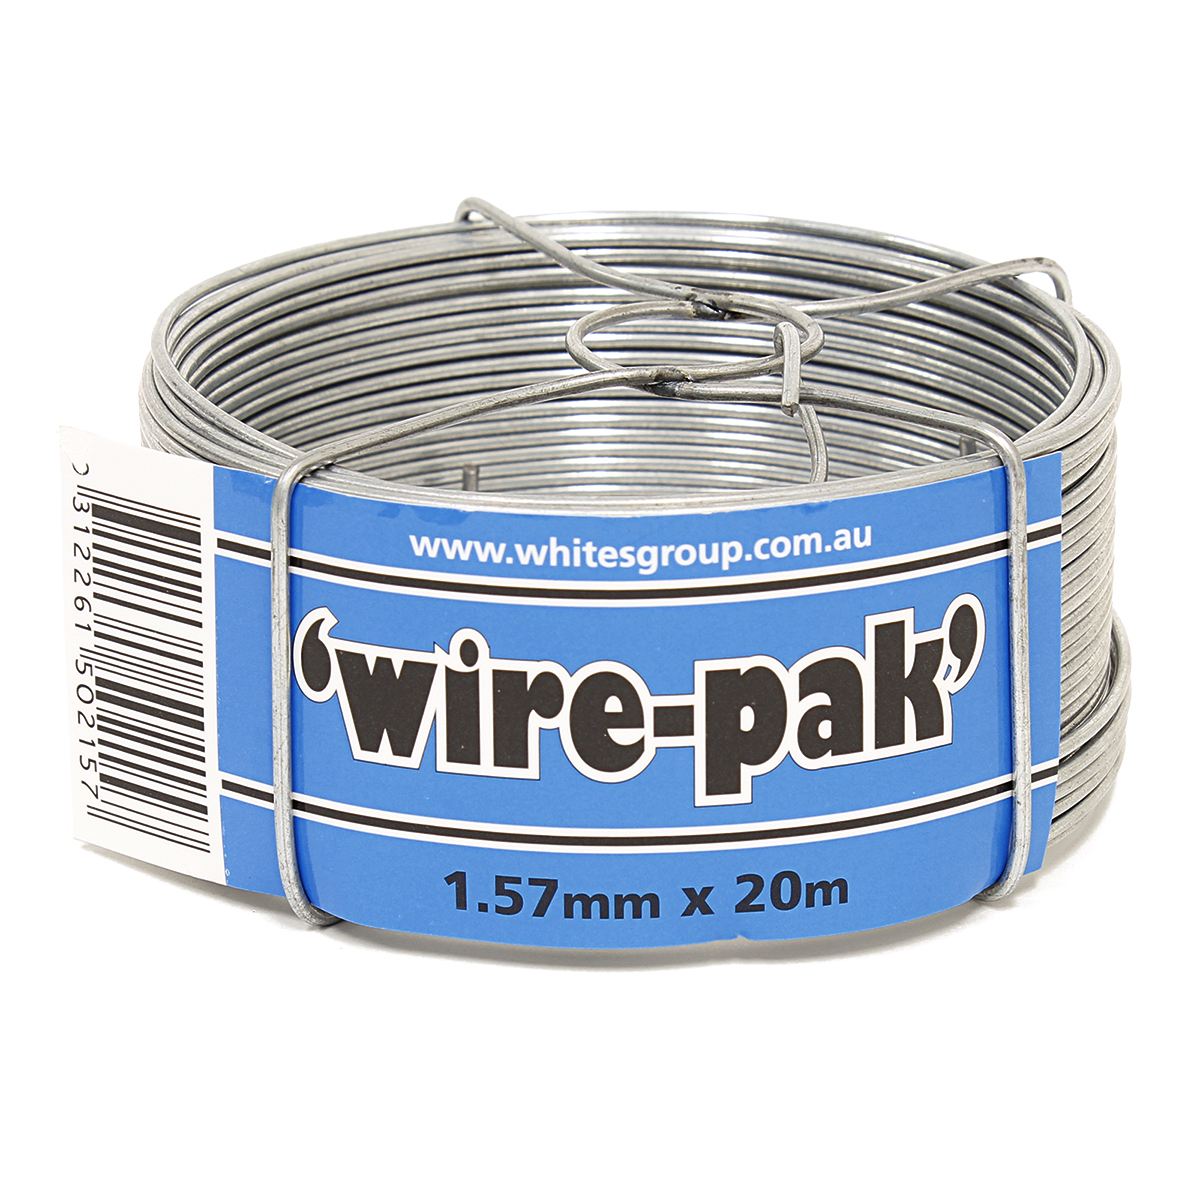 50215 Wirepak blue